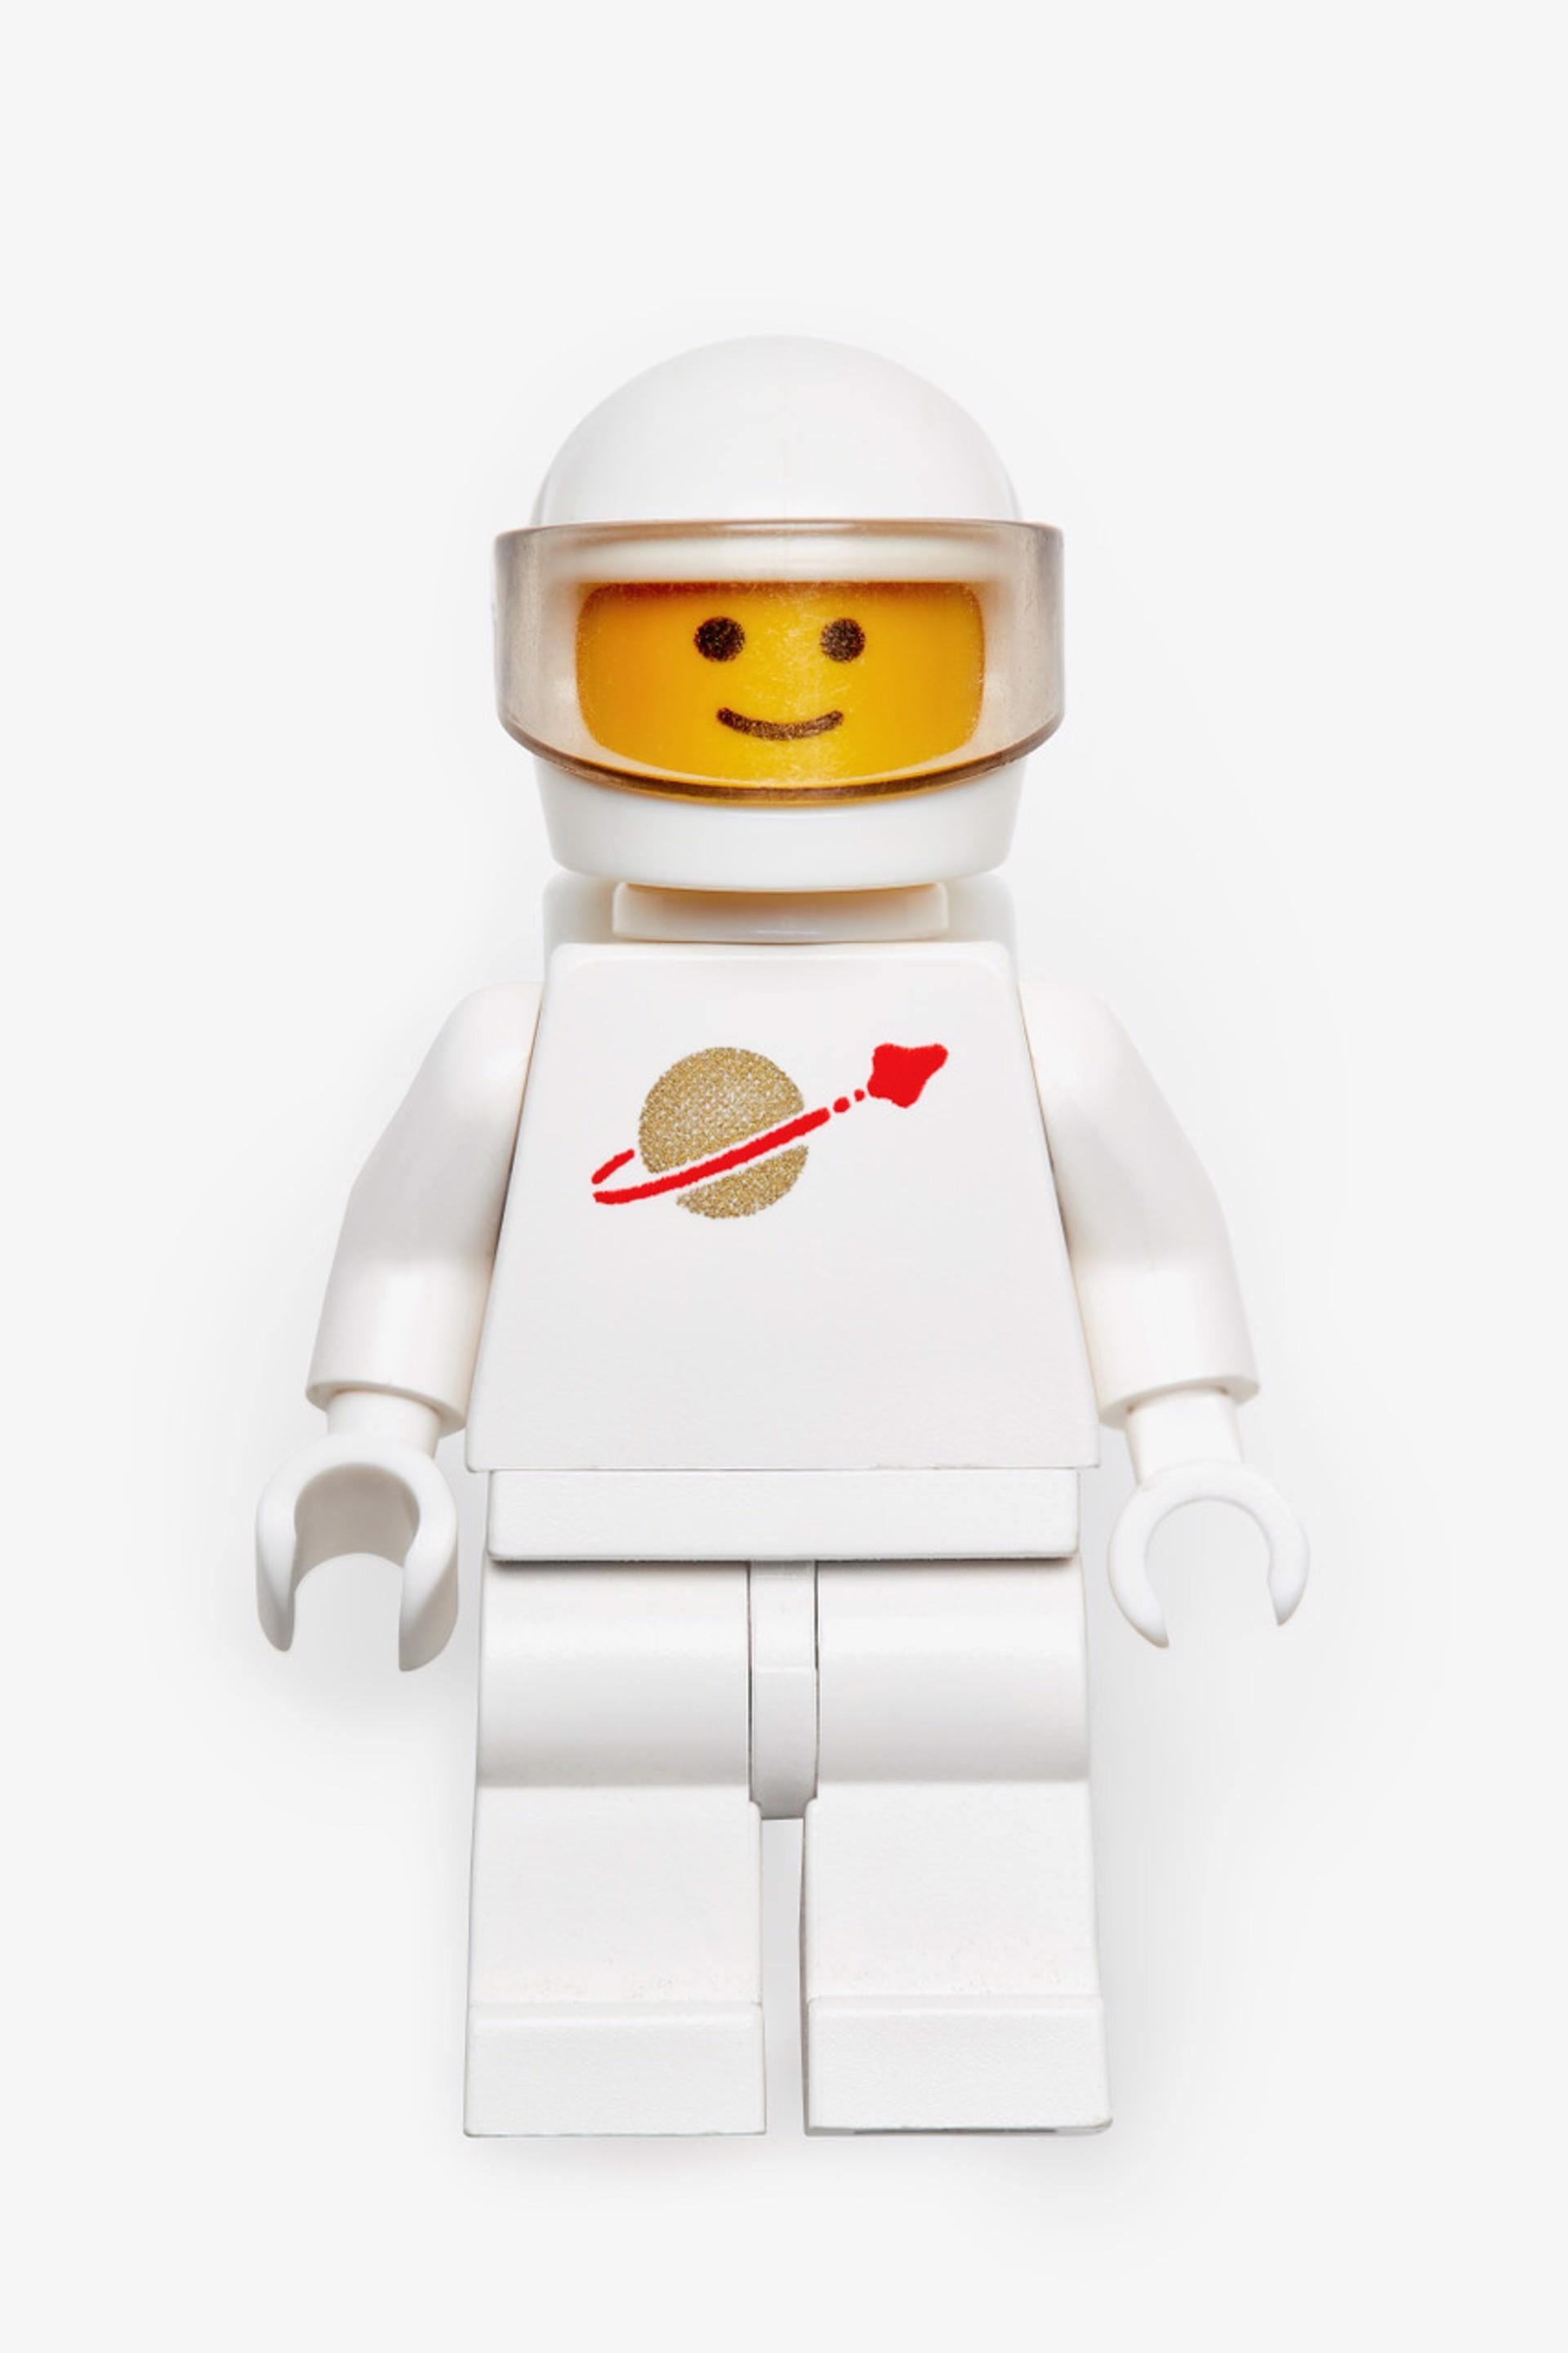 Peter Andrew Lusztyk Figurative Photograph - Lego "Astro" (48" x 36")